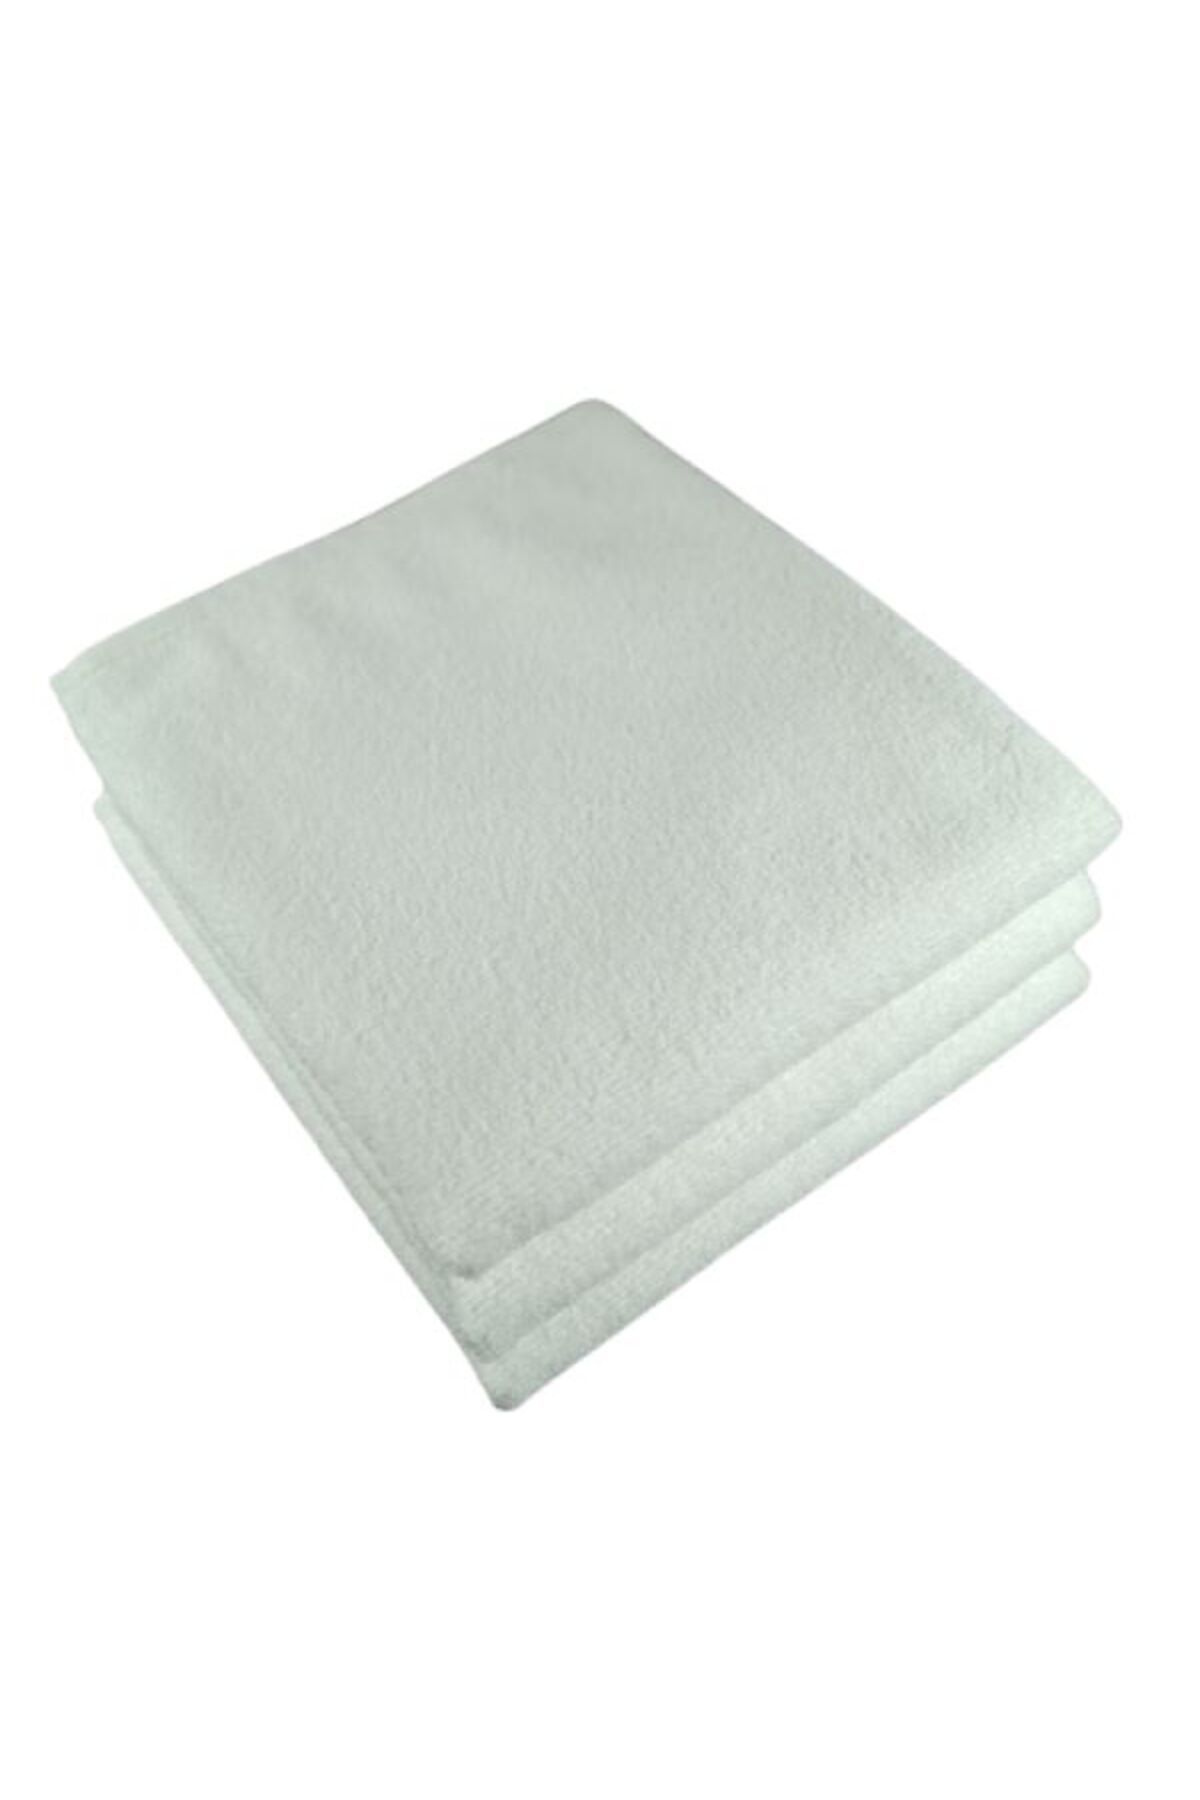 Bol Ticaret Tekstil 4 adet outlet leke tutmayan beyaz mikrofiber banyo spa masaj plaj havuz otel havlusu 75x140 cm